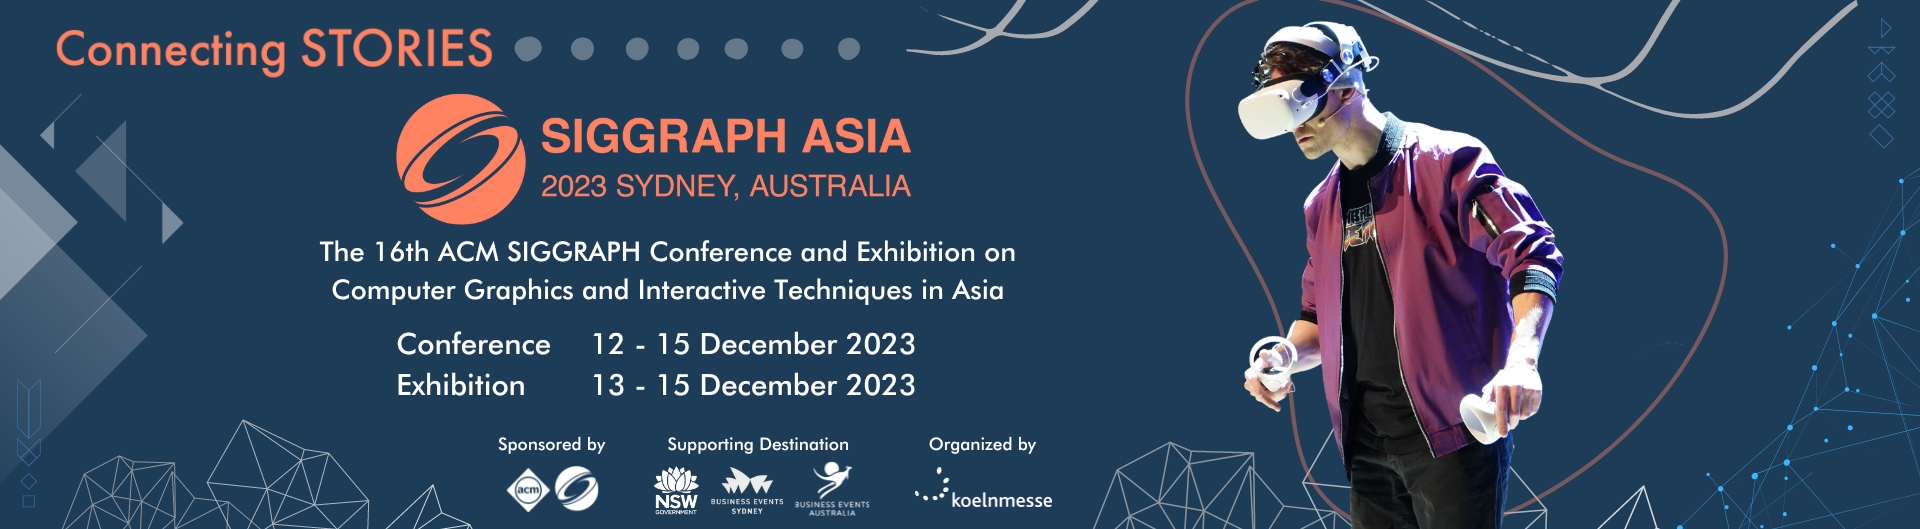 SIGGRAPH Asia 2023 ICC Sydney